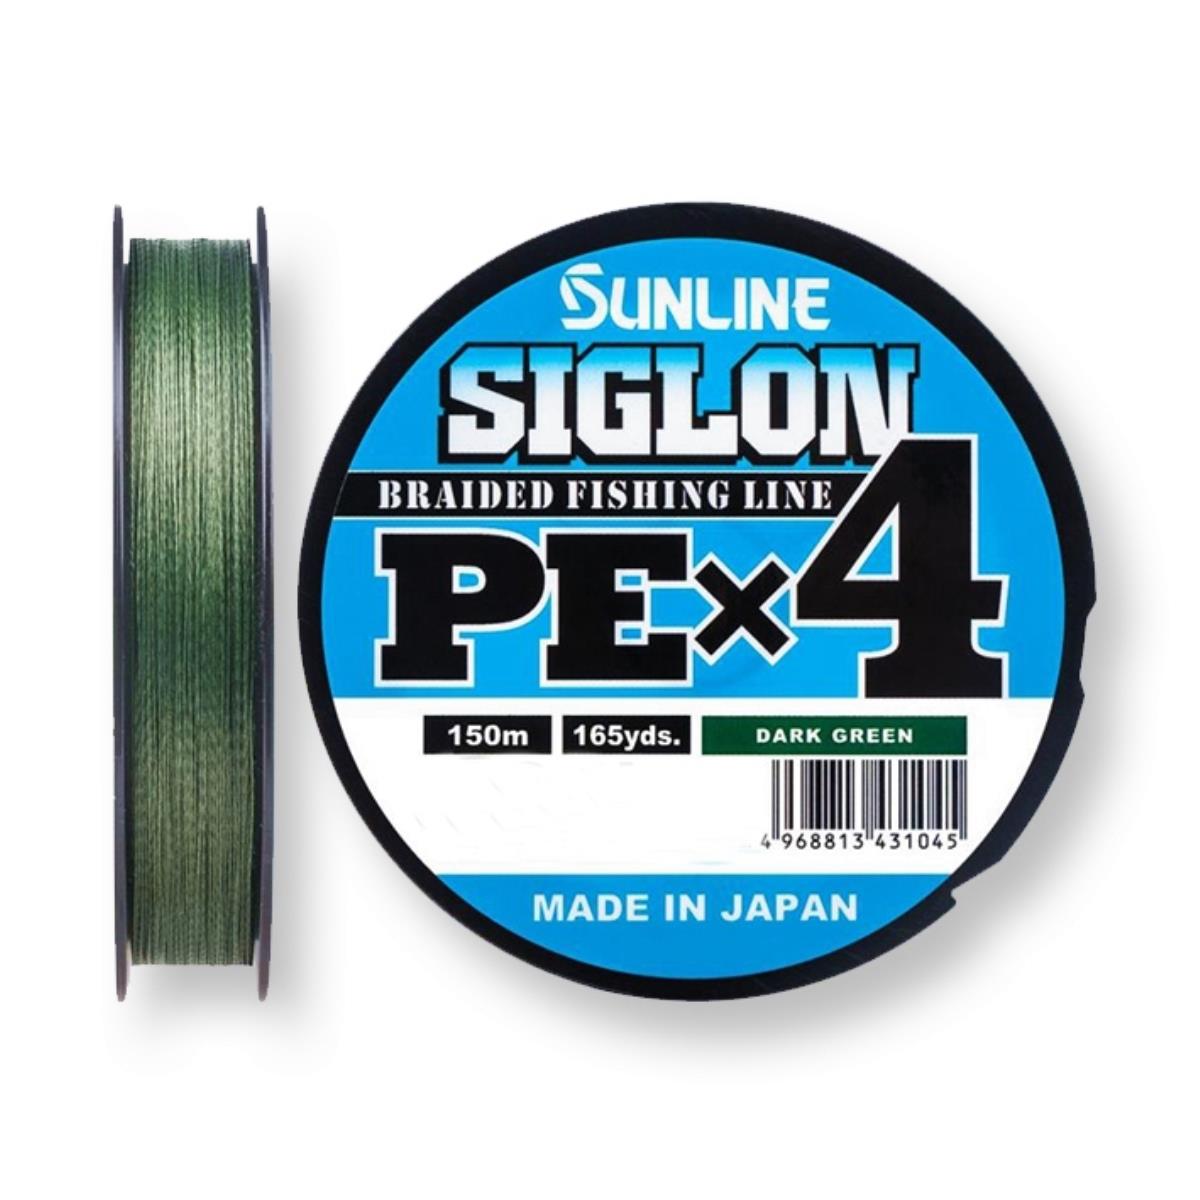 Шнур SIGLON PE×4 150 м (Dark Green) Sunline шнур siglon pe×4 150 м dark green sunline